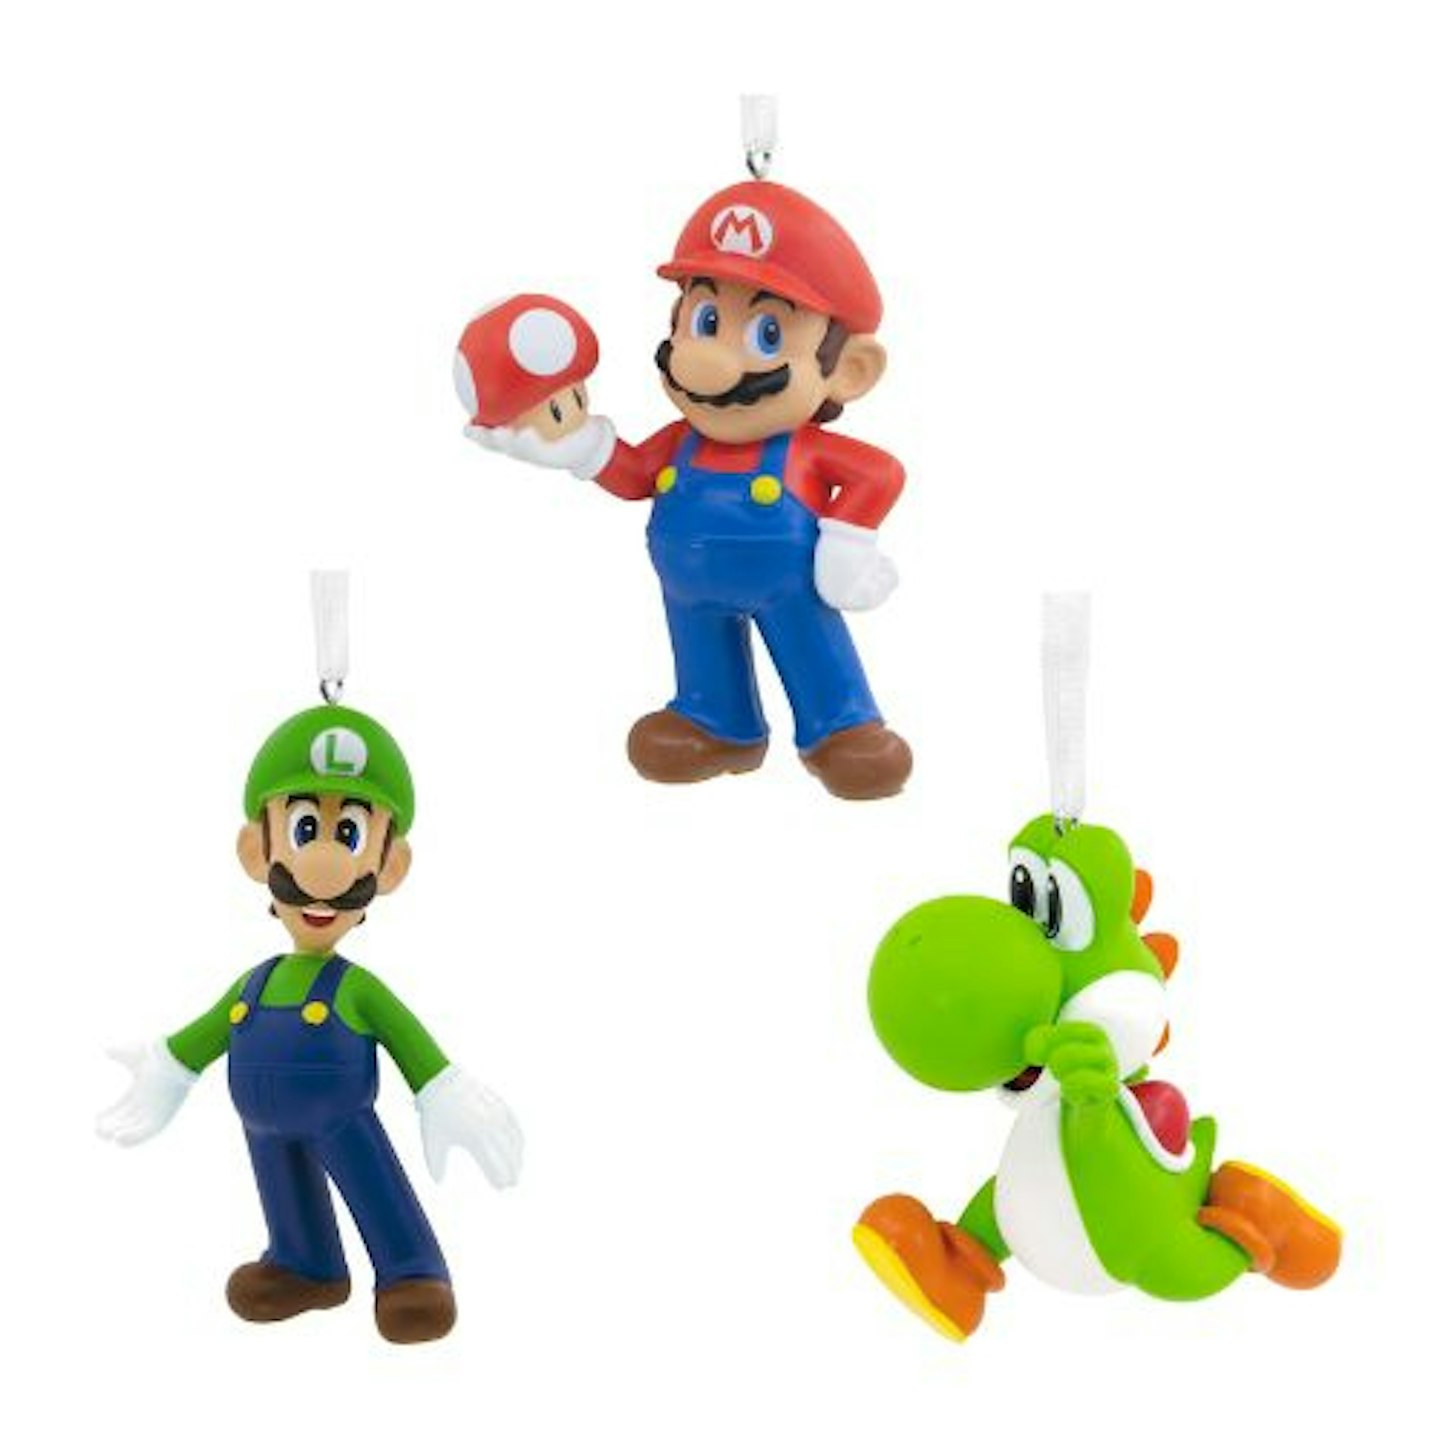 Mario + Luigi + Yoshi Holiday Ornament bundle